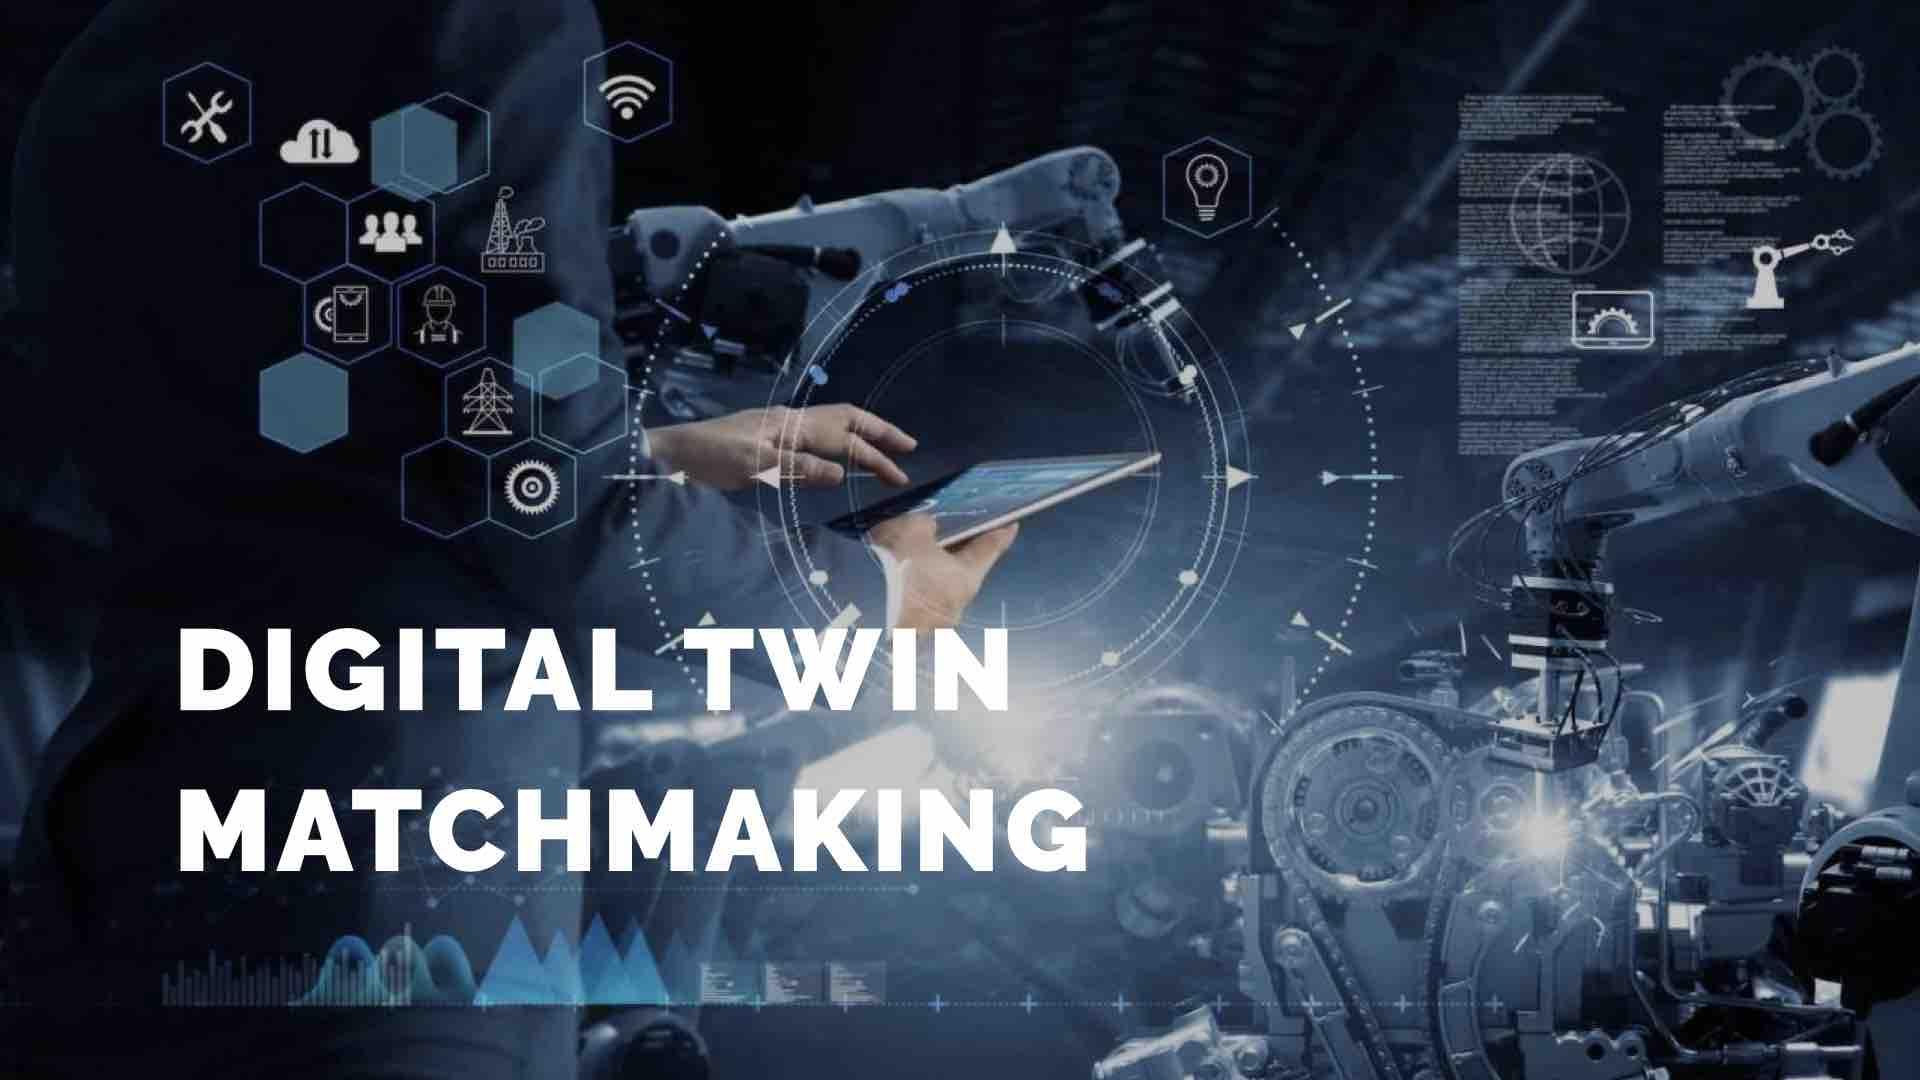 Digital twin -matchmaking – hae mukaan 22.9.2021 mennessä